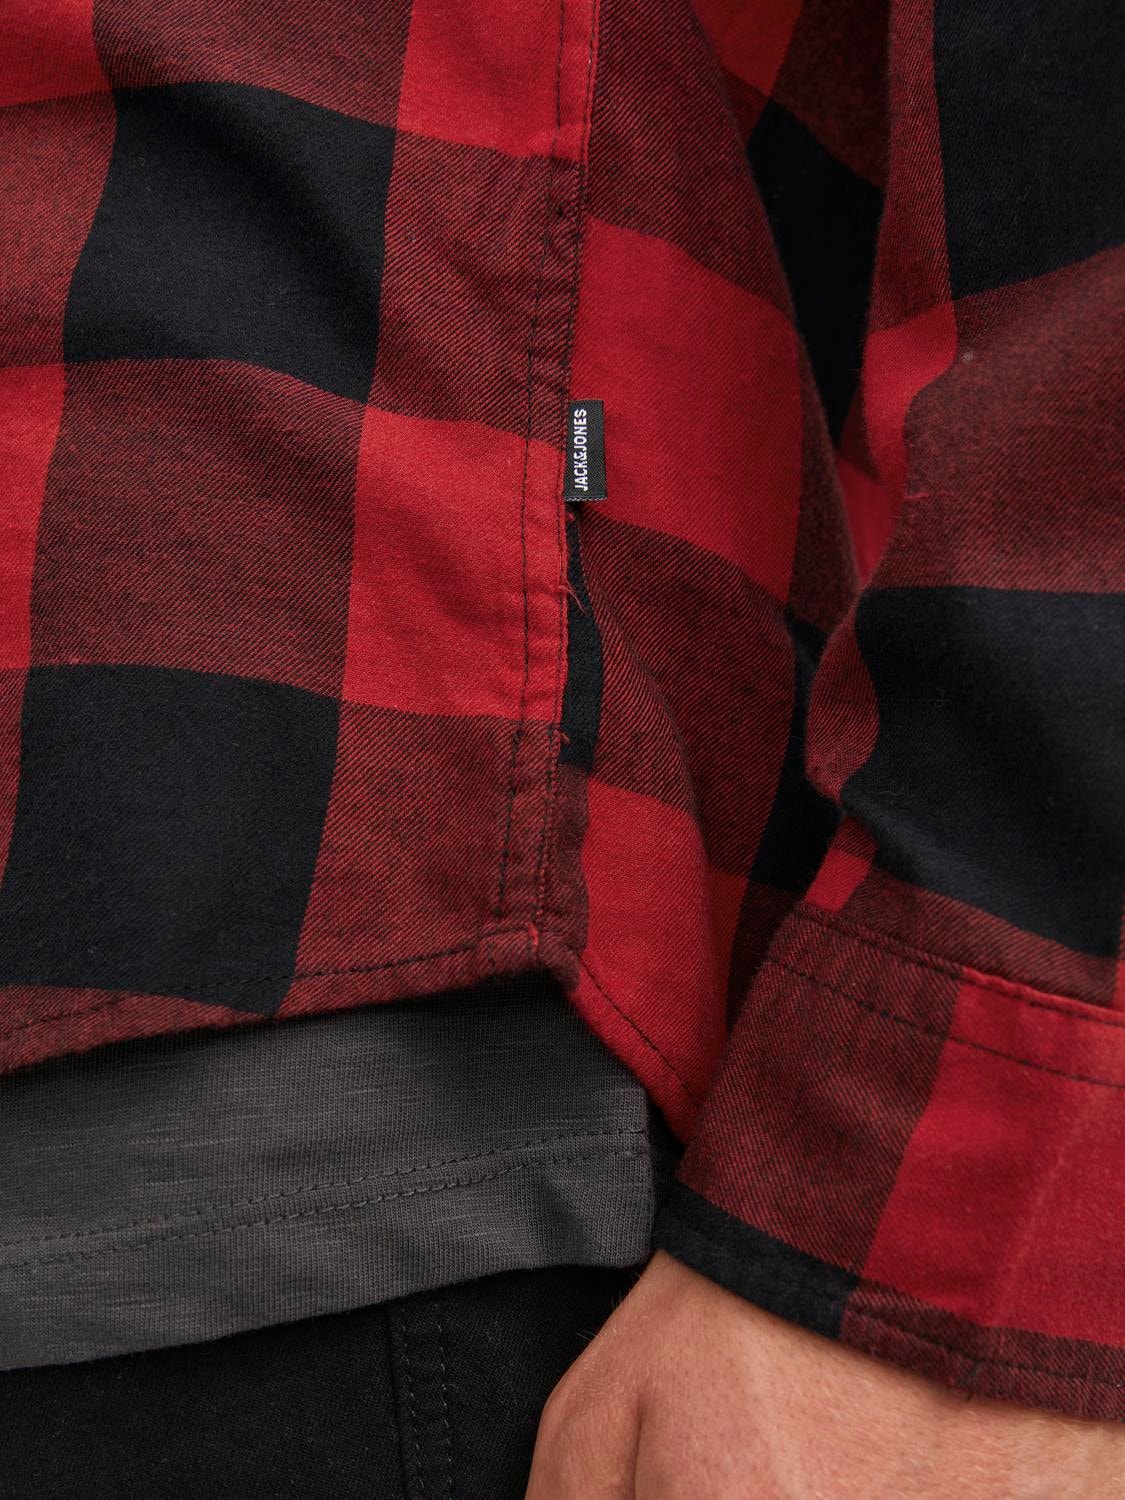 Jack & Jones Slim Fit Checked shirt -Brick Red - 12181602